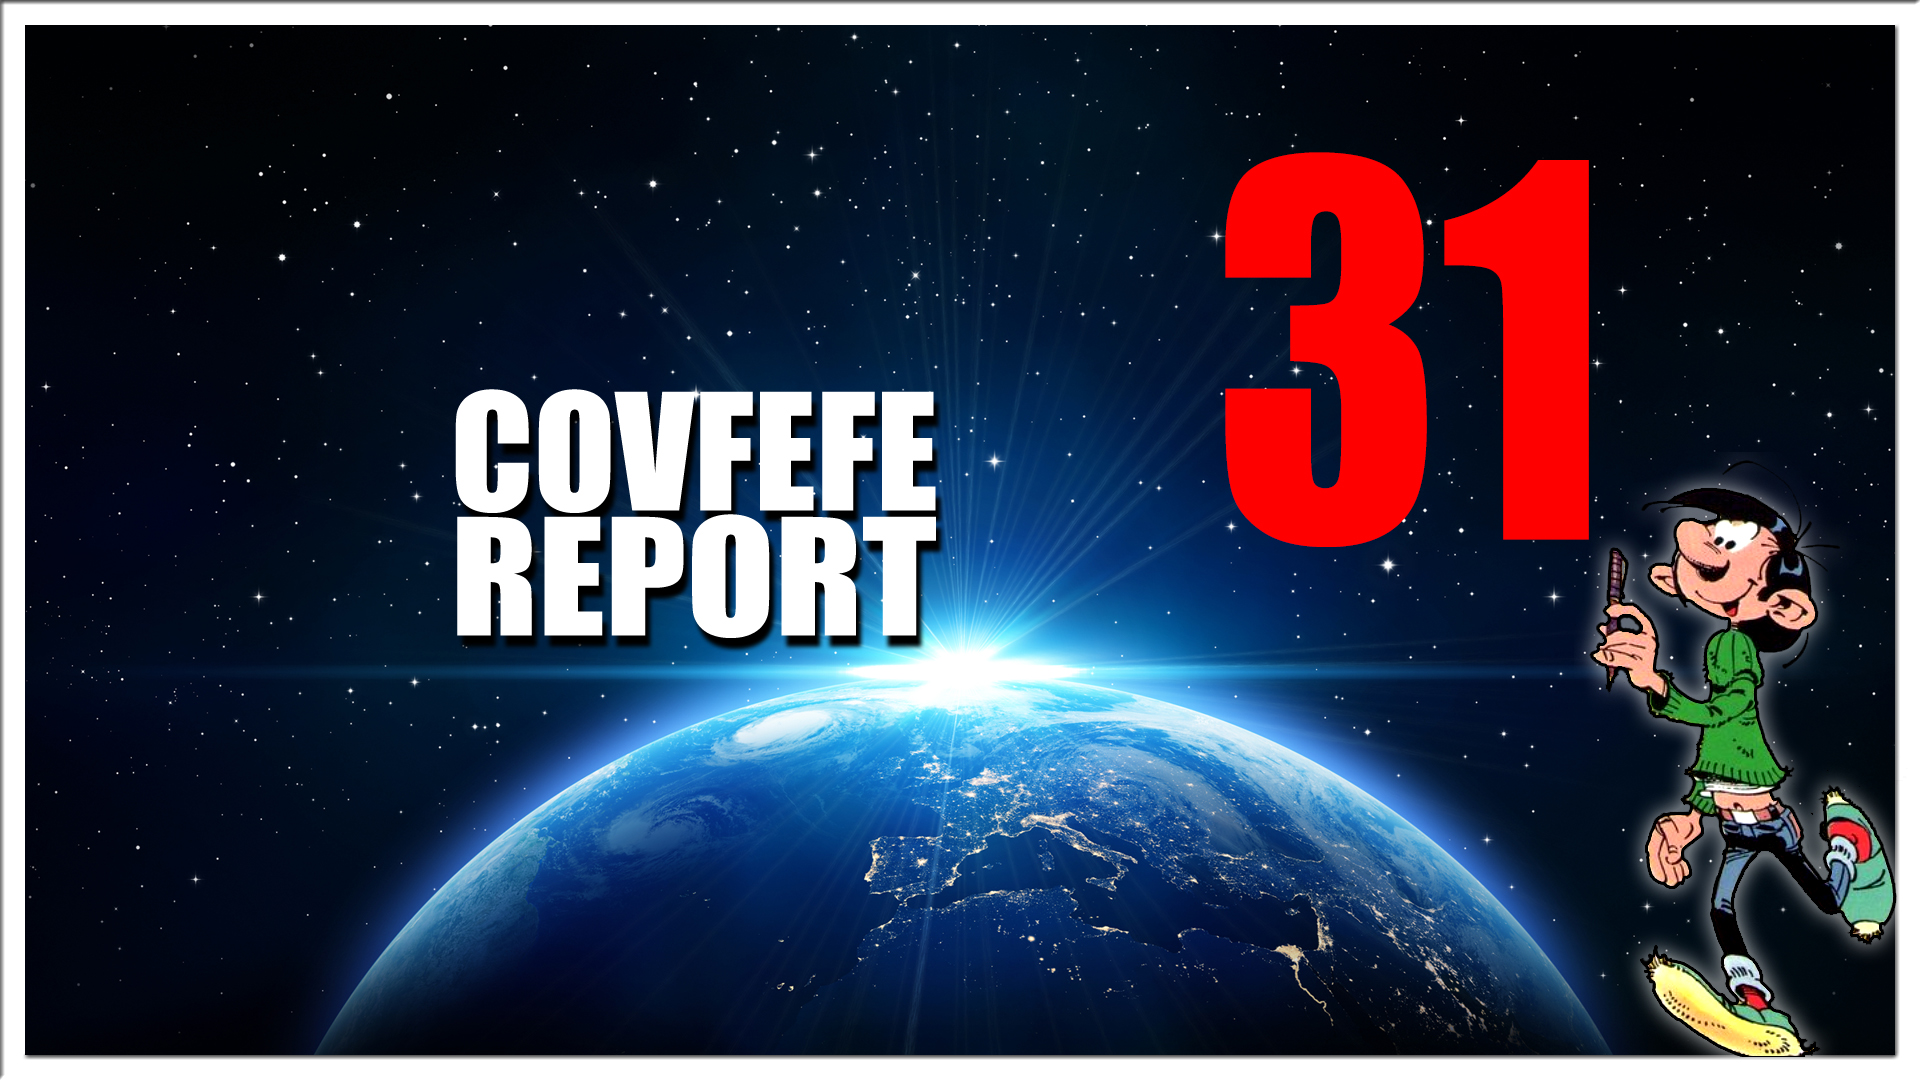 Covfefe Report 31. Jerry Airfryert, Zwarte piet & Soros